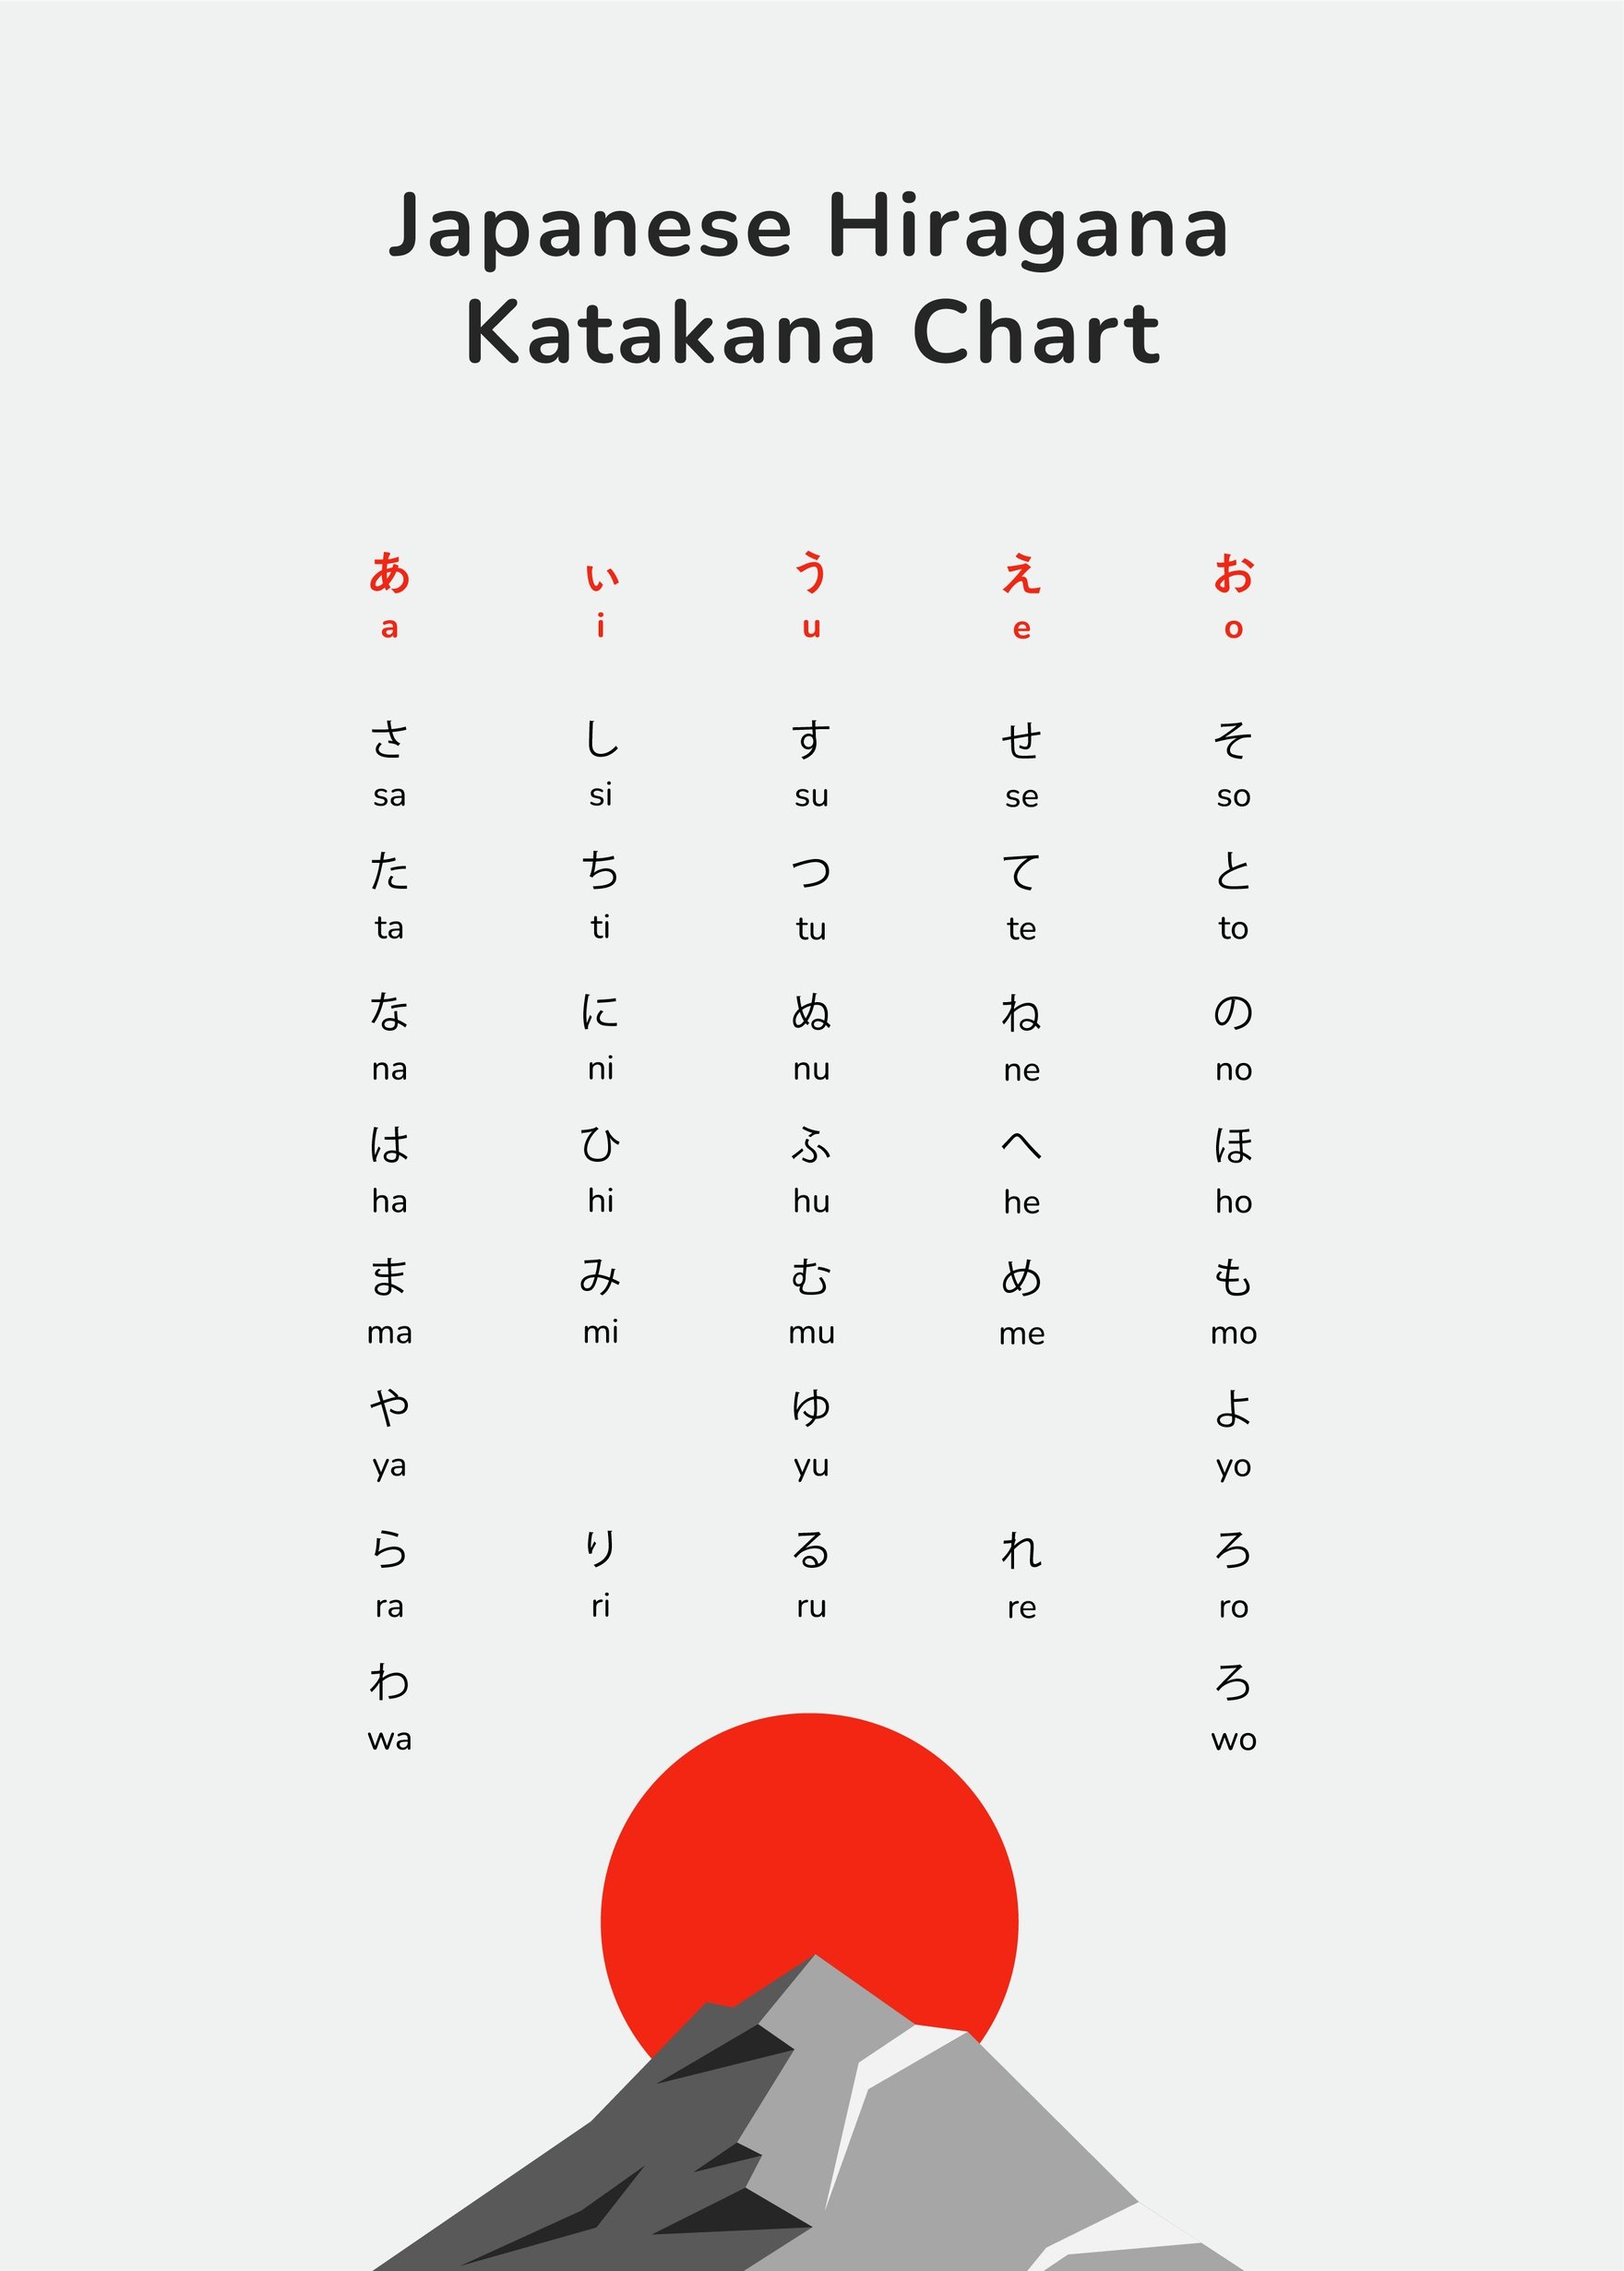 Japanese Hiragana Katakana Chart